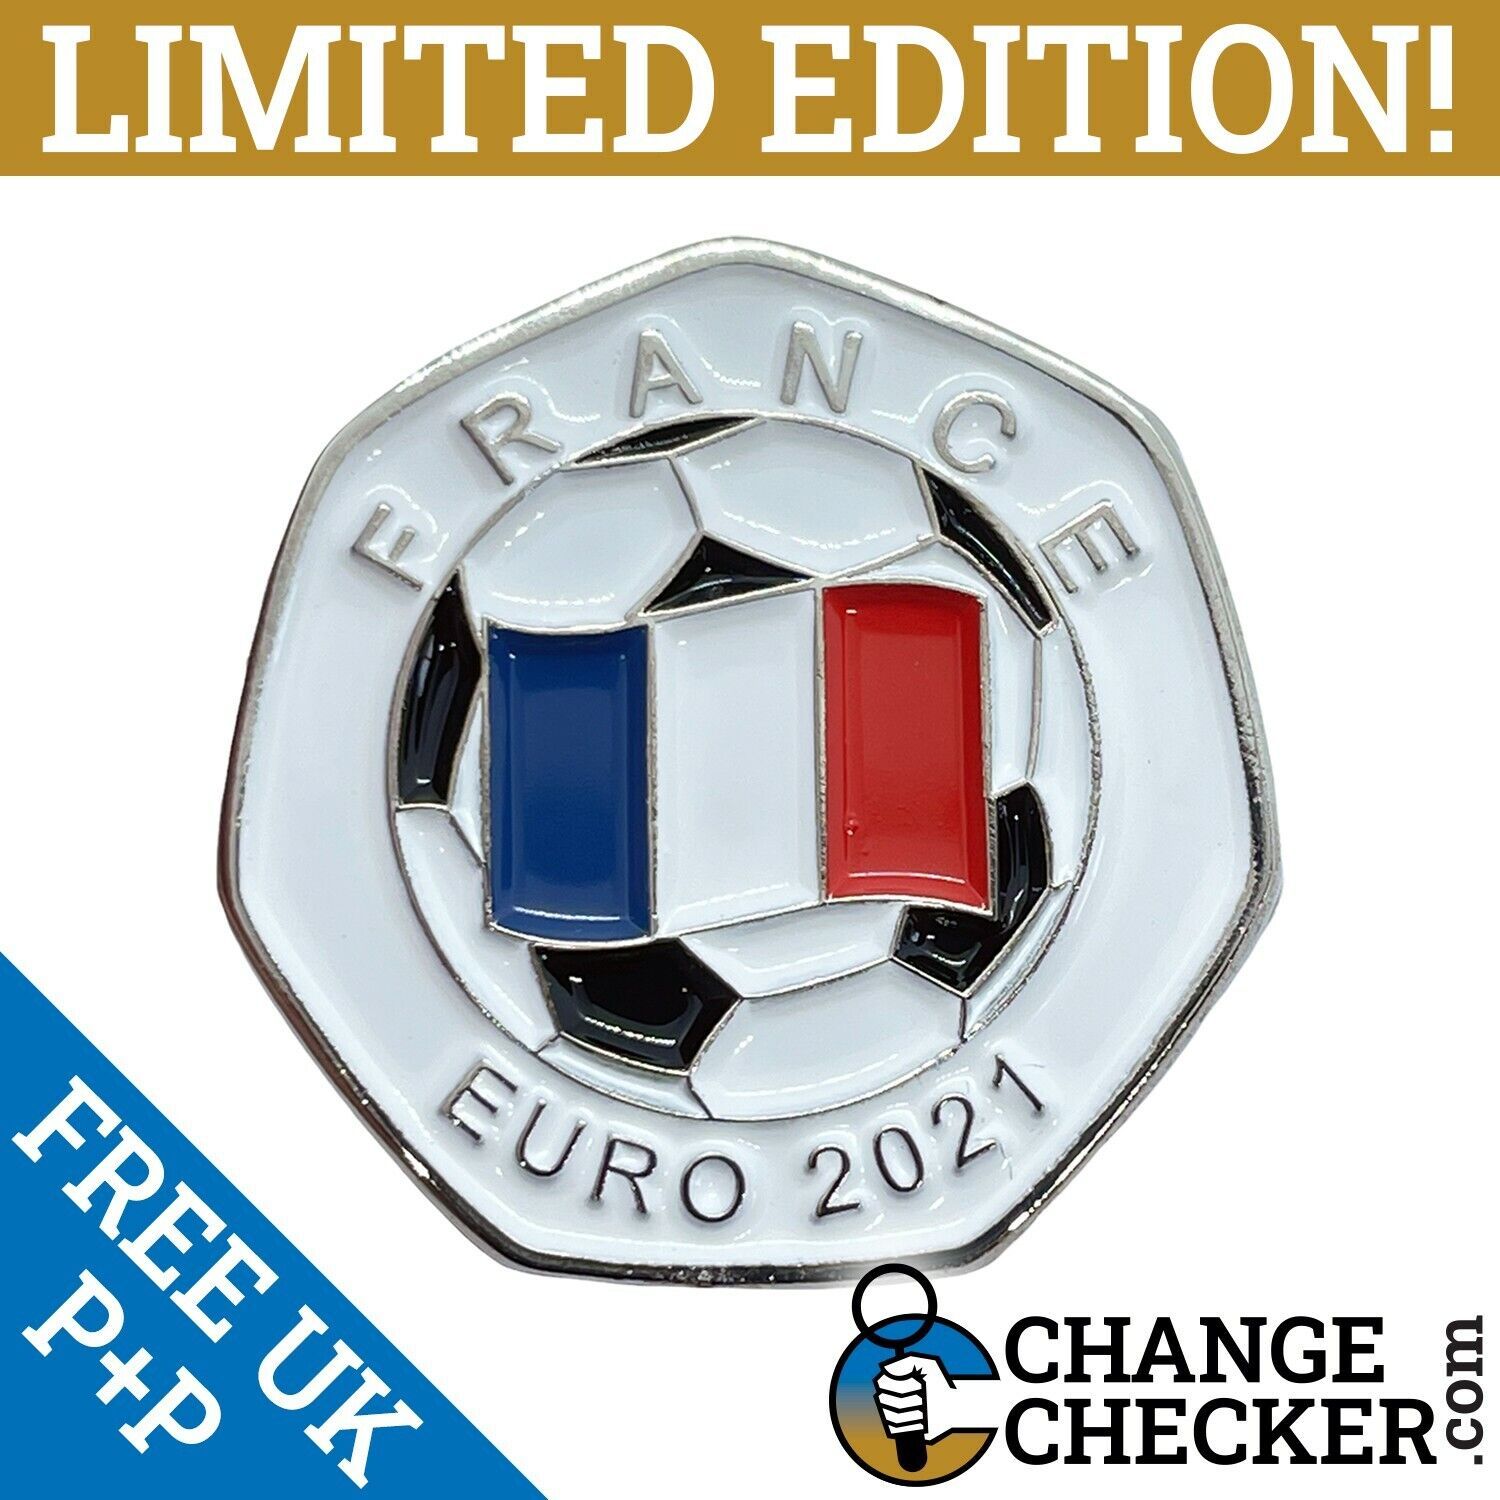 France EURO 2021 Football 50p Shaped Coins